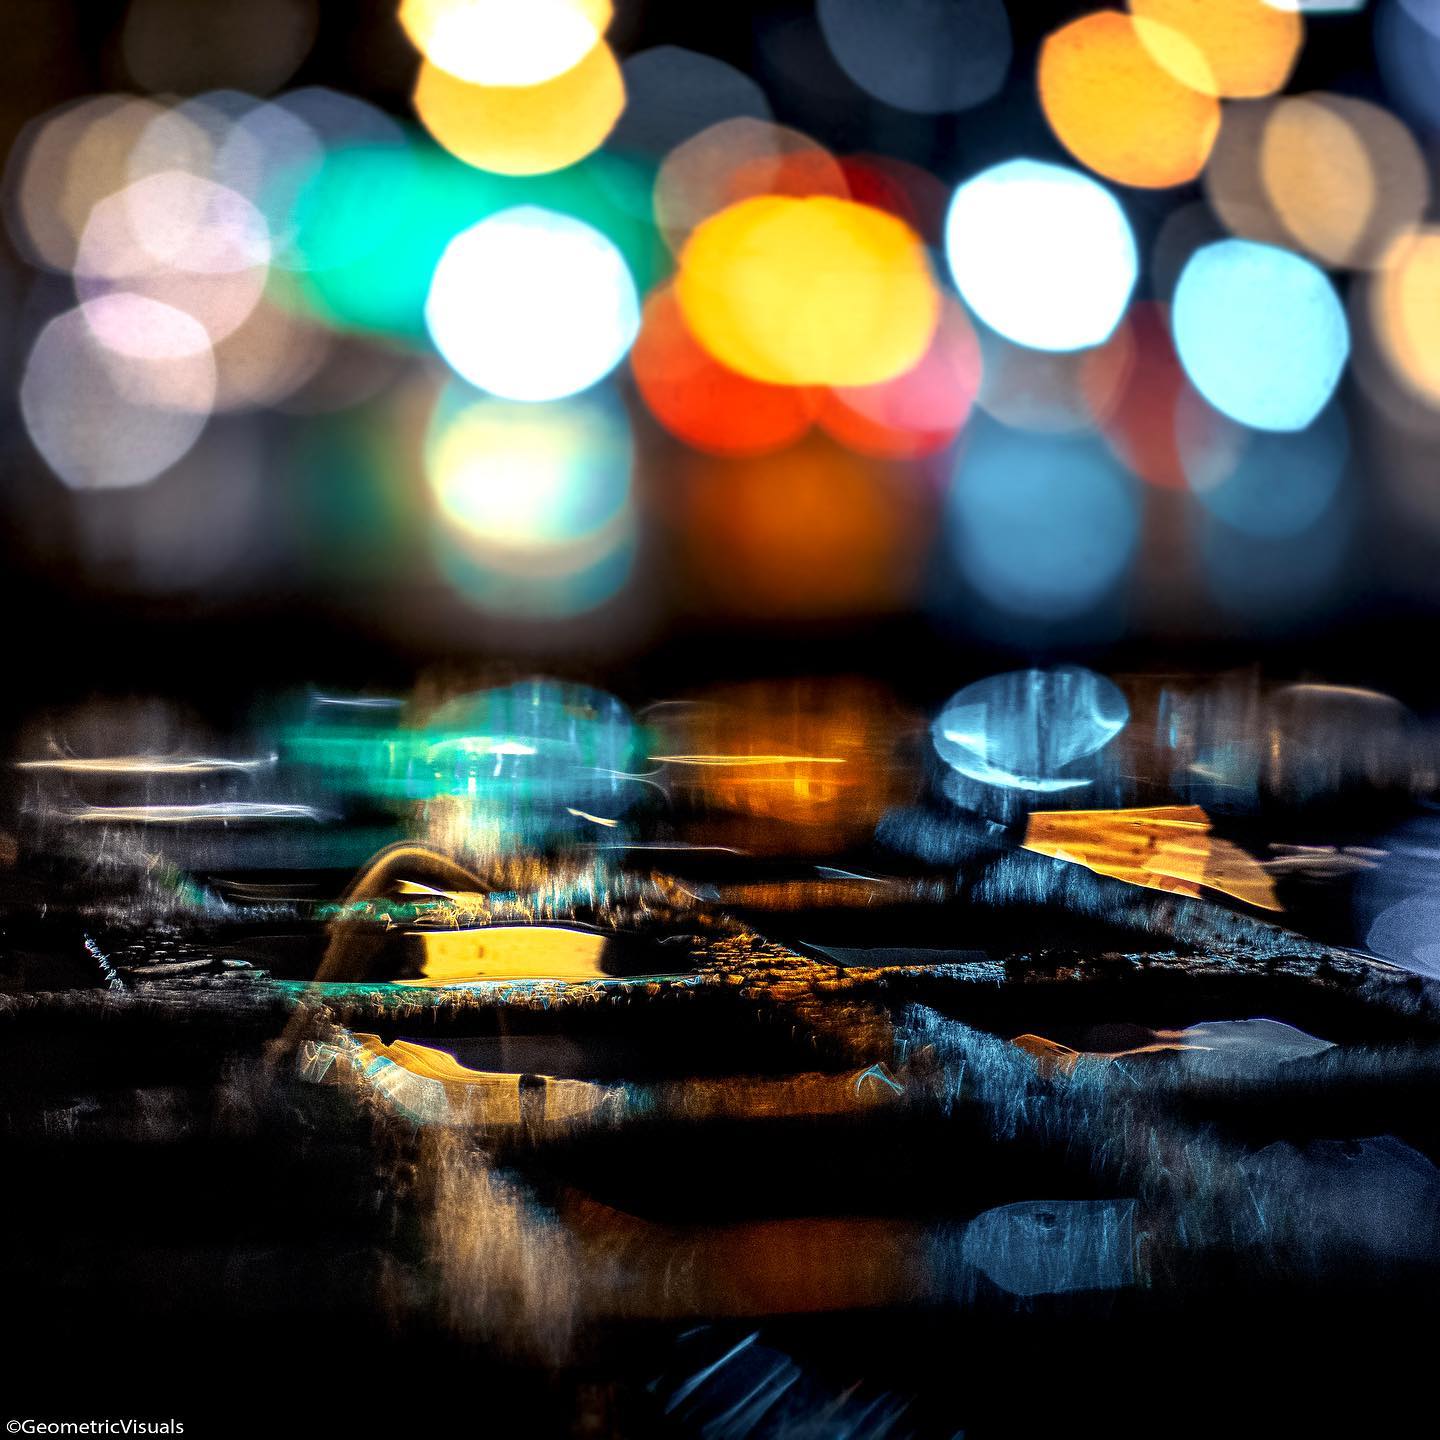 Watergate . . . 

•

•

•

•

#citykillerz #citygrammers #nightshooters #bokehphotofan #longexpo #slowshutter #city_captures #nightshots #night_trails #night_owlz #shotzdelight #bokehkillers #ig_tones #shotz__fired #globalnightsquad #raw_nightshots #subshooterz #cityphotography #bokeh_kings #night_gram #lightjunkies #loves_night #pocket_nights #nse_urban #denver_afterdark #themilehighcity #bokehphotography #bokehlicious #urbangrammers